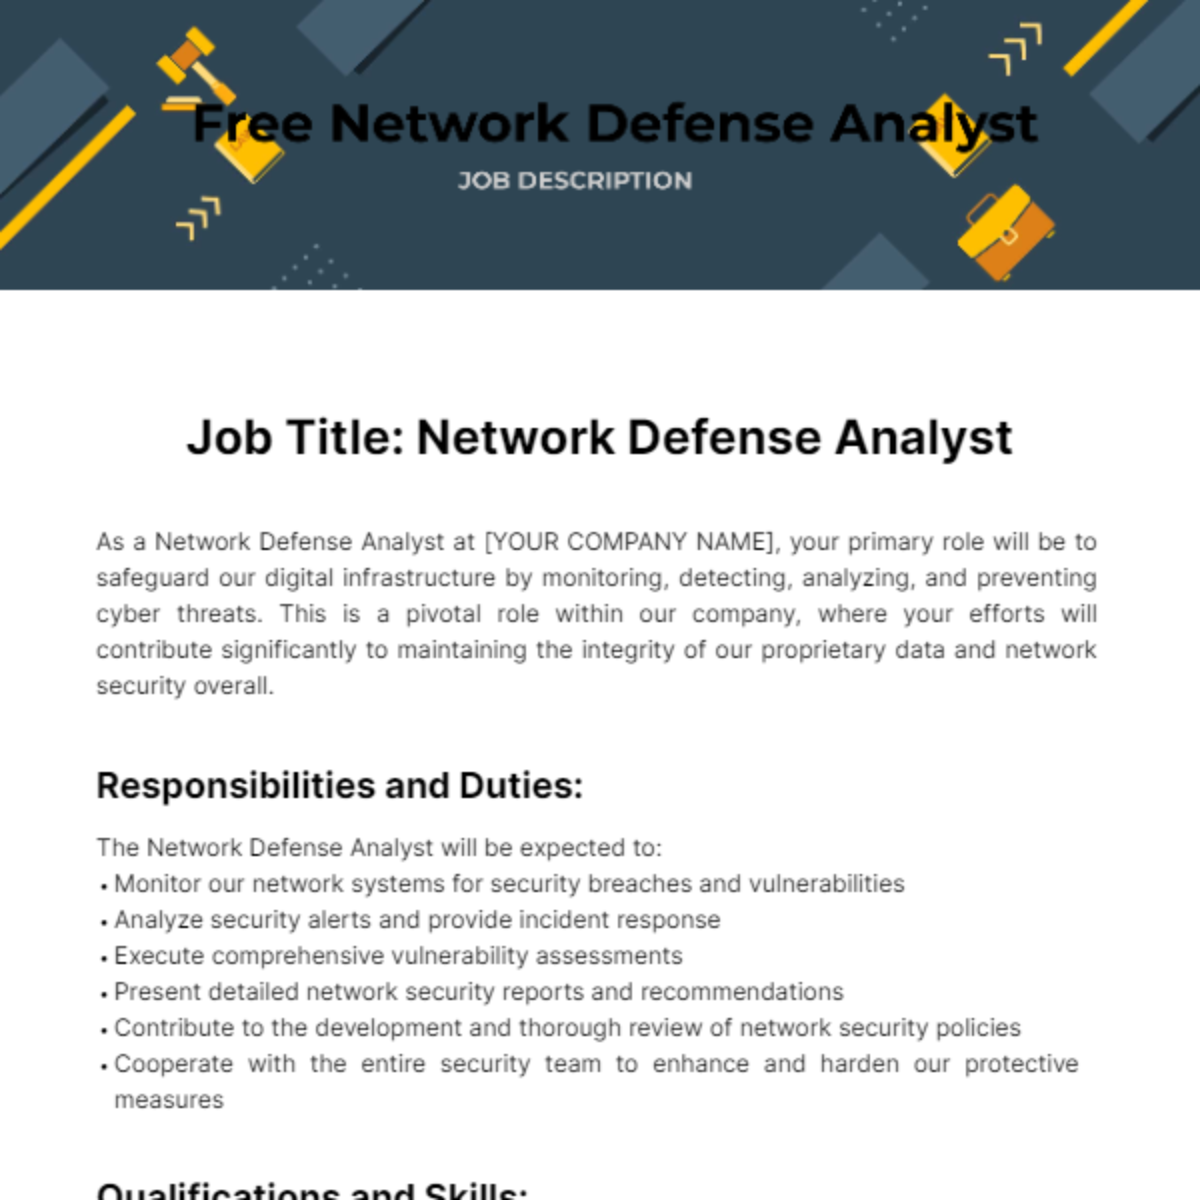 Network Defense Analyst Job Description Template